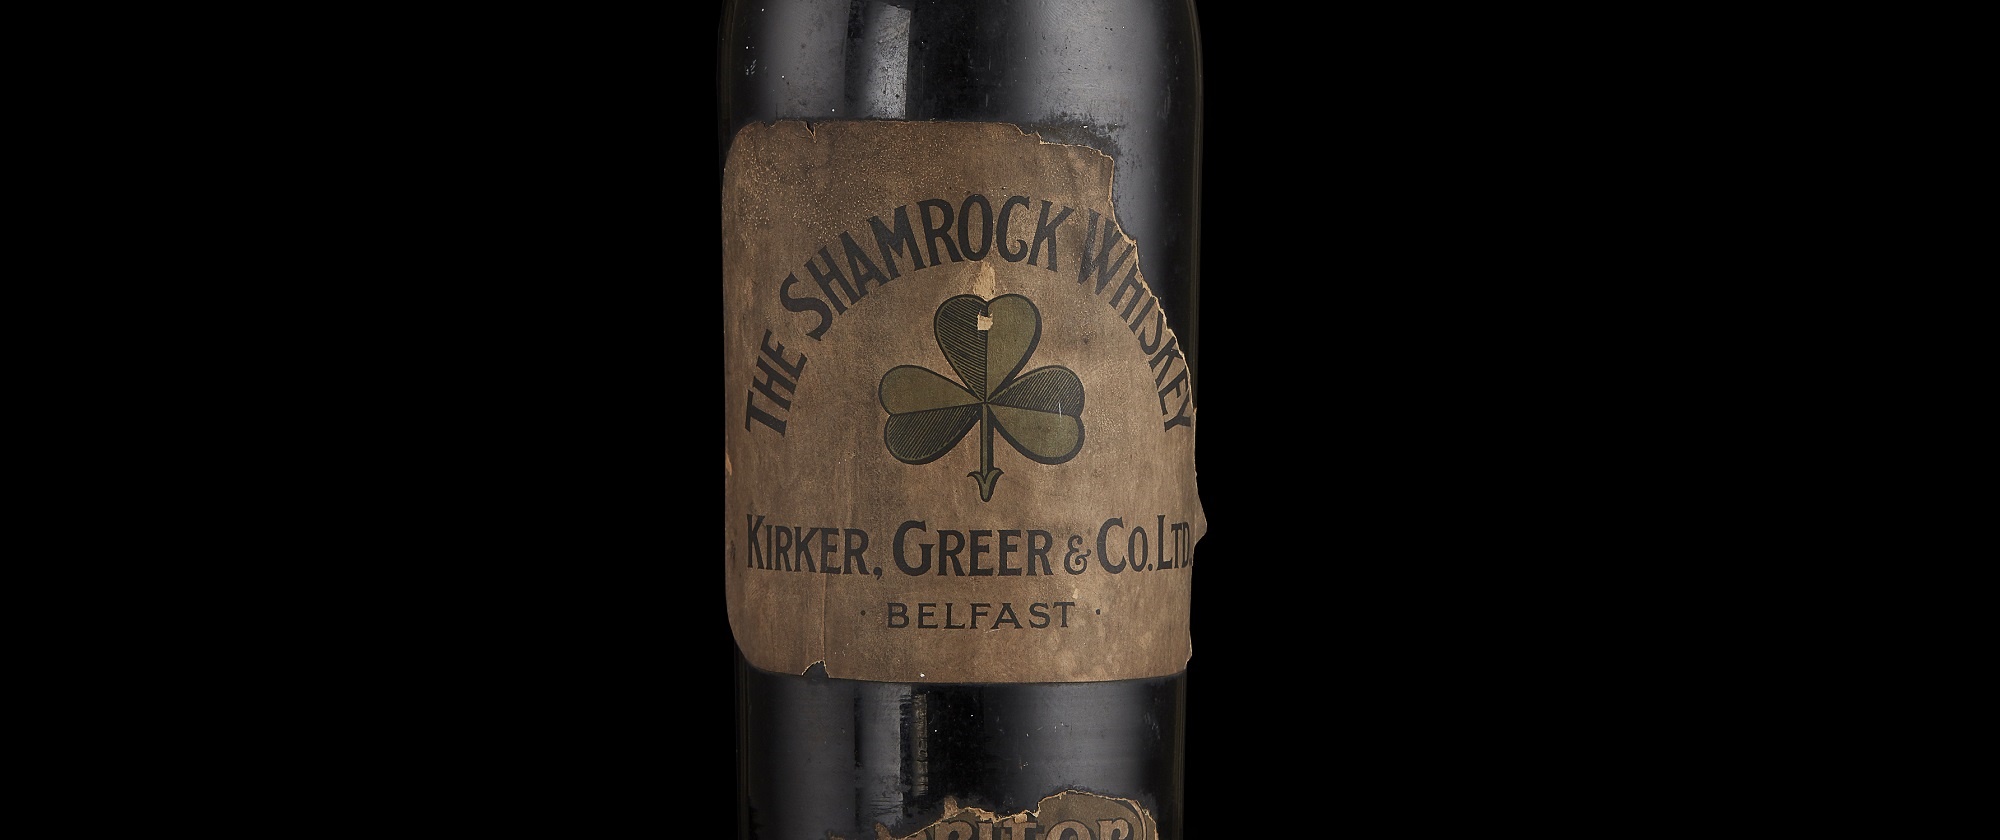 The Shamrock Whiskey